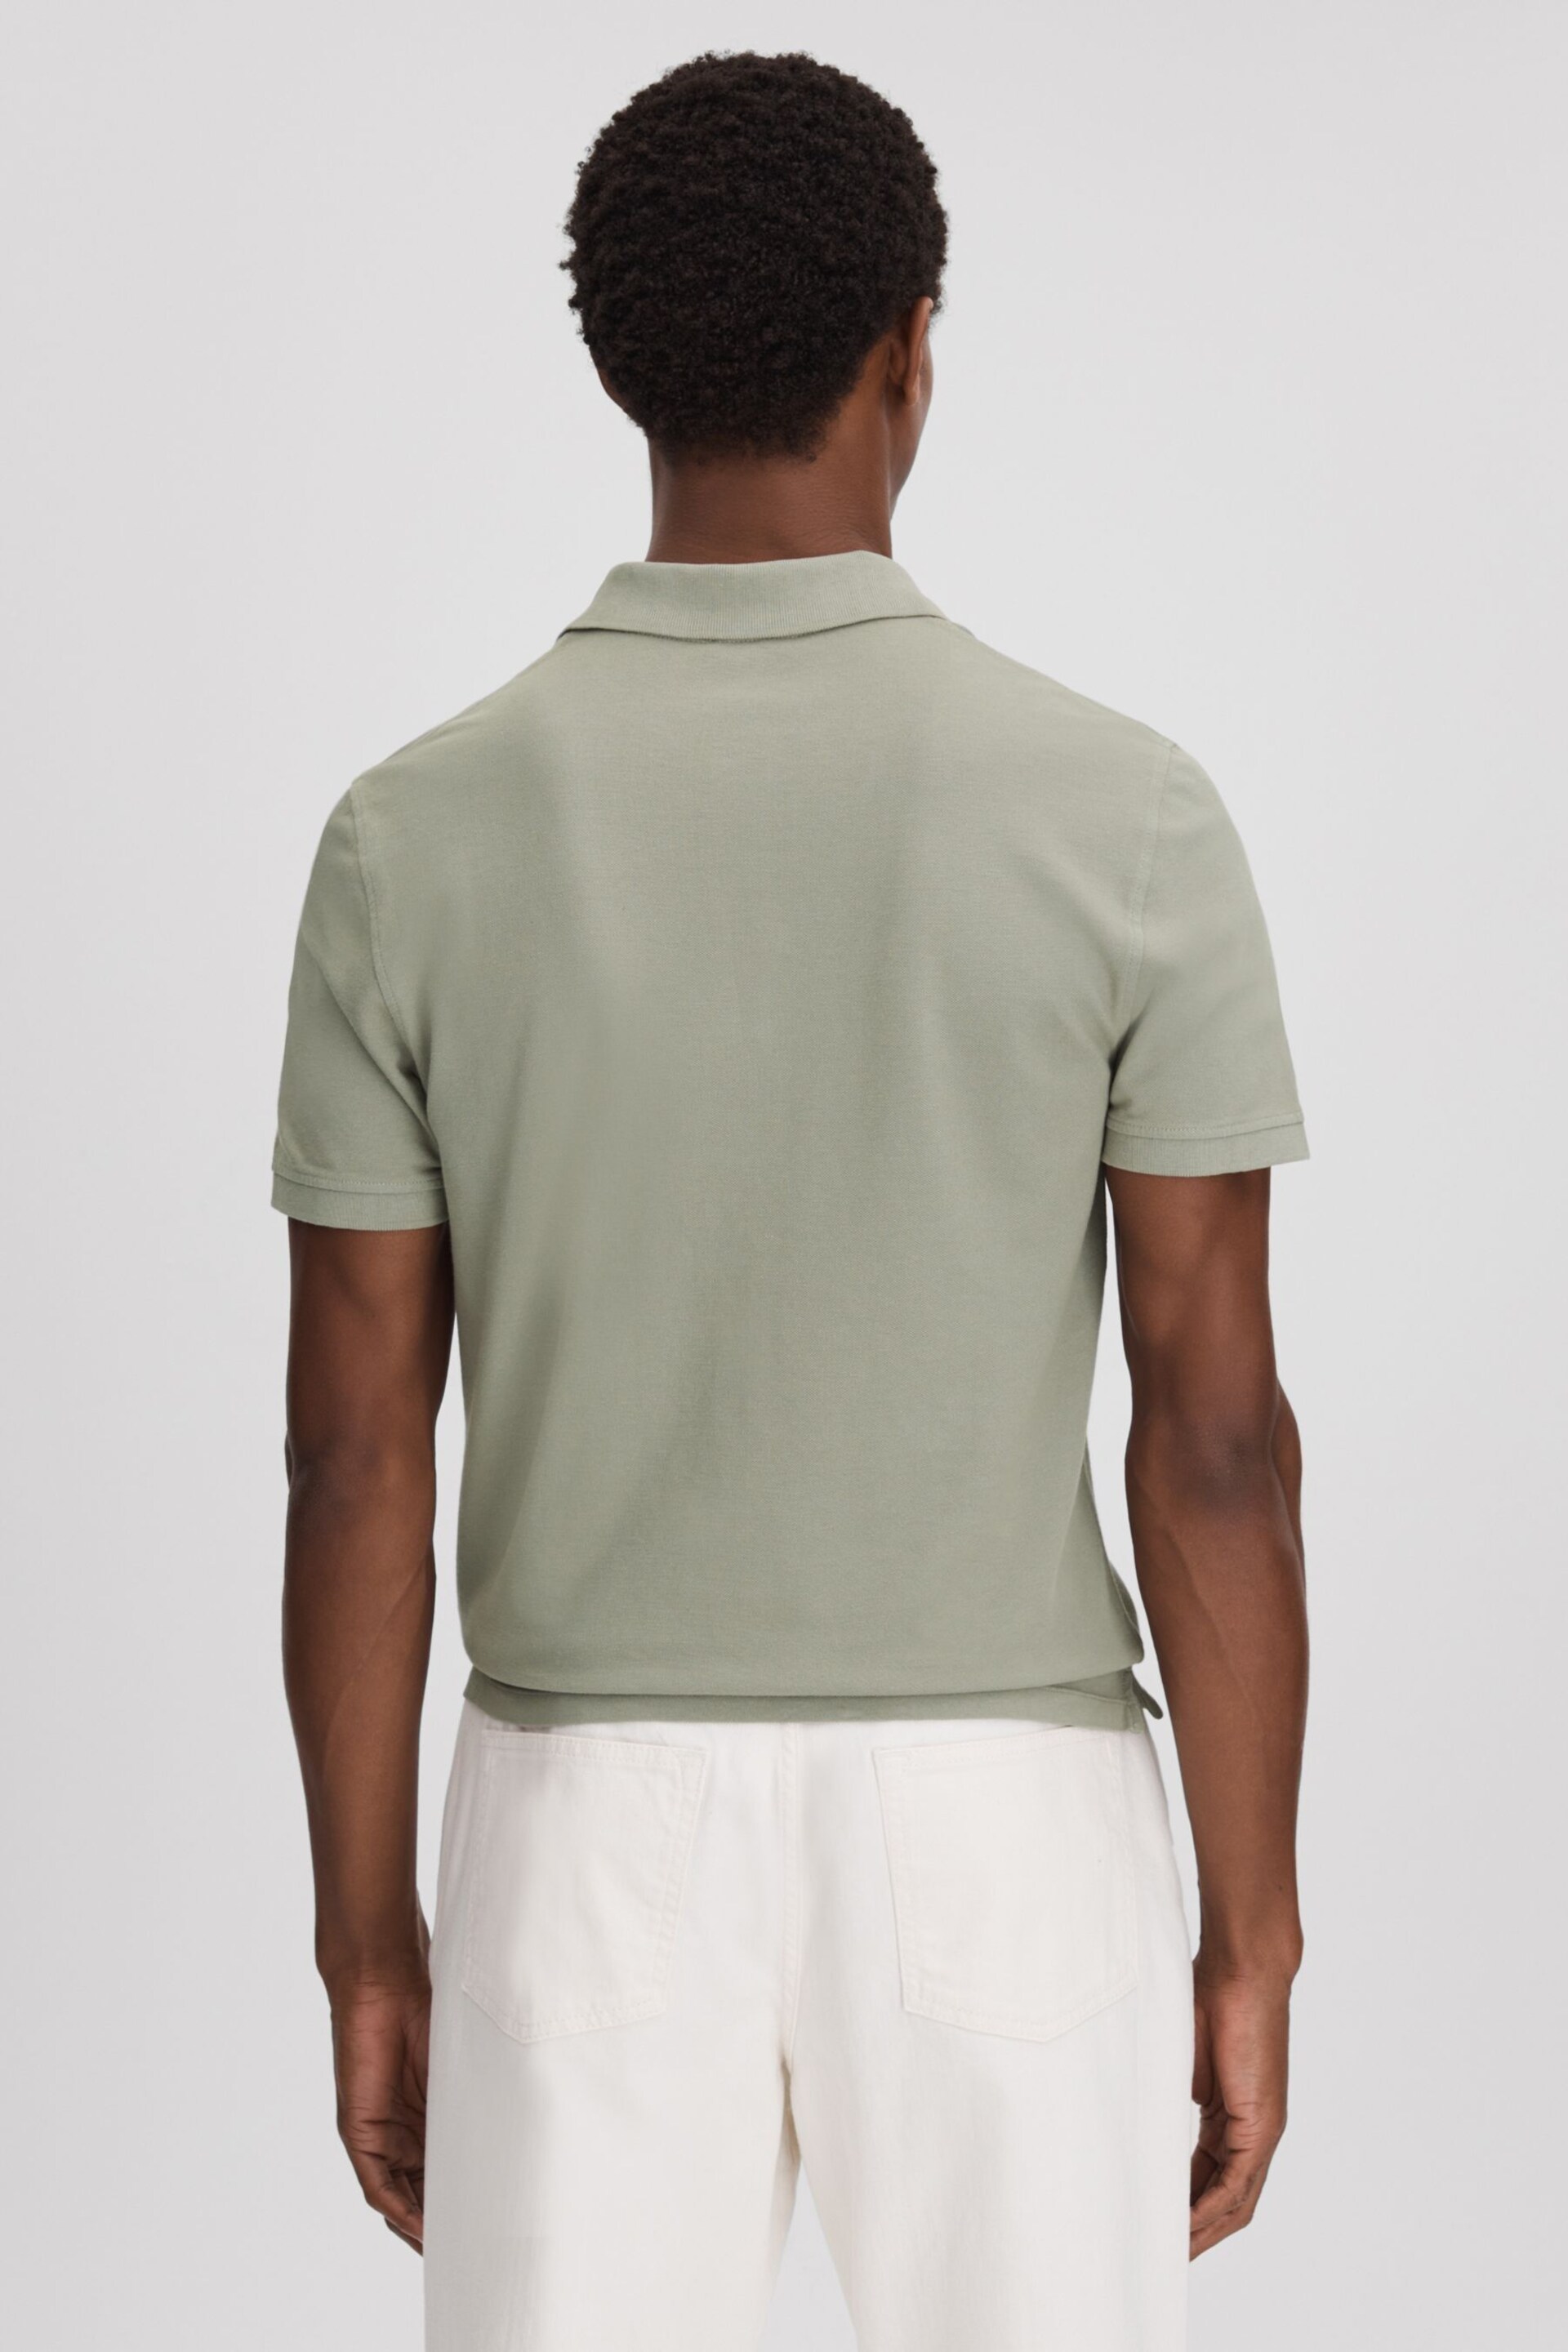 Reiss Dark Sage Puro Garment Dyed Cotton Polo Shirt - Image 5 of 6